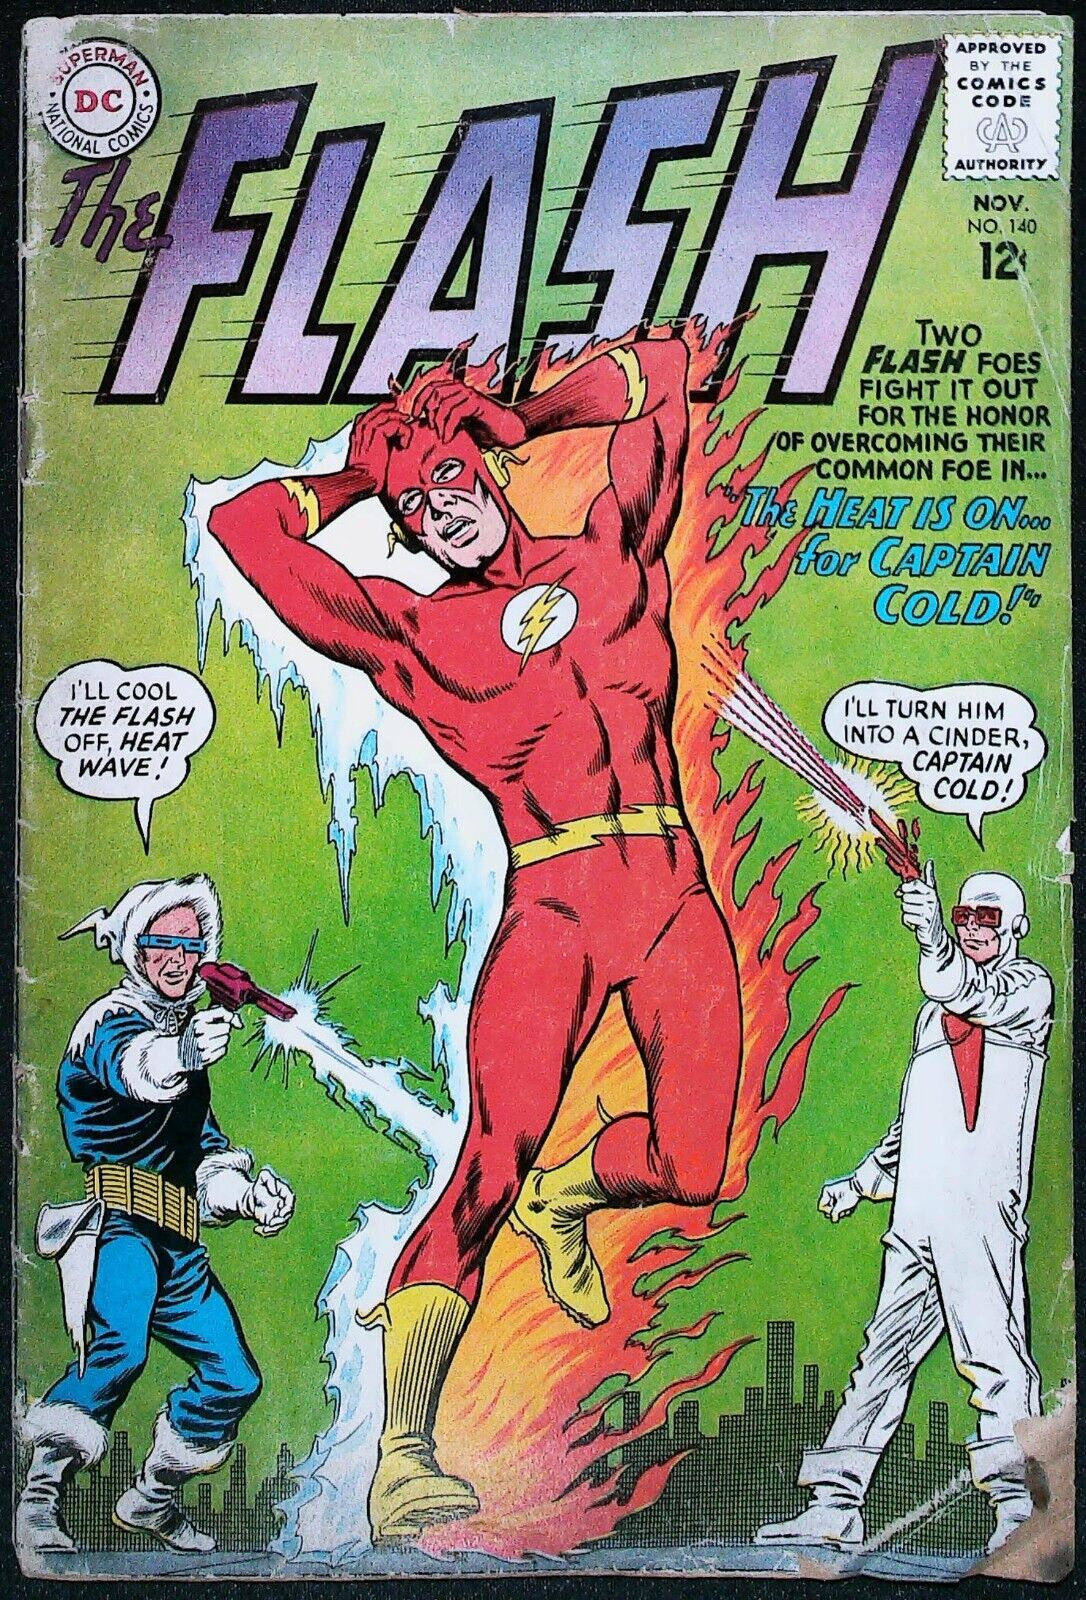 The Flash #140 Vol 1 (1963) KEY *1st App Of Heat Wave* - DC - Cover Detached